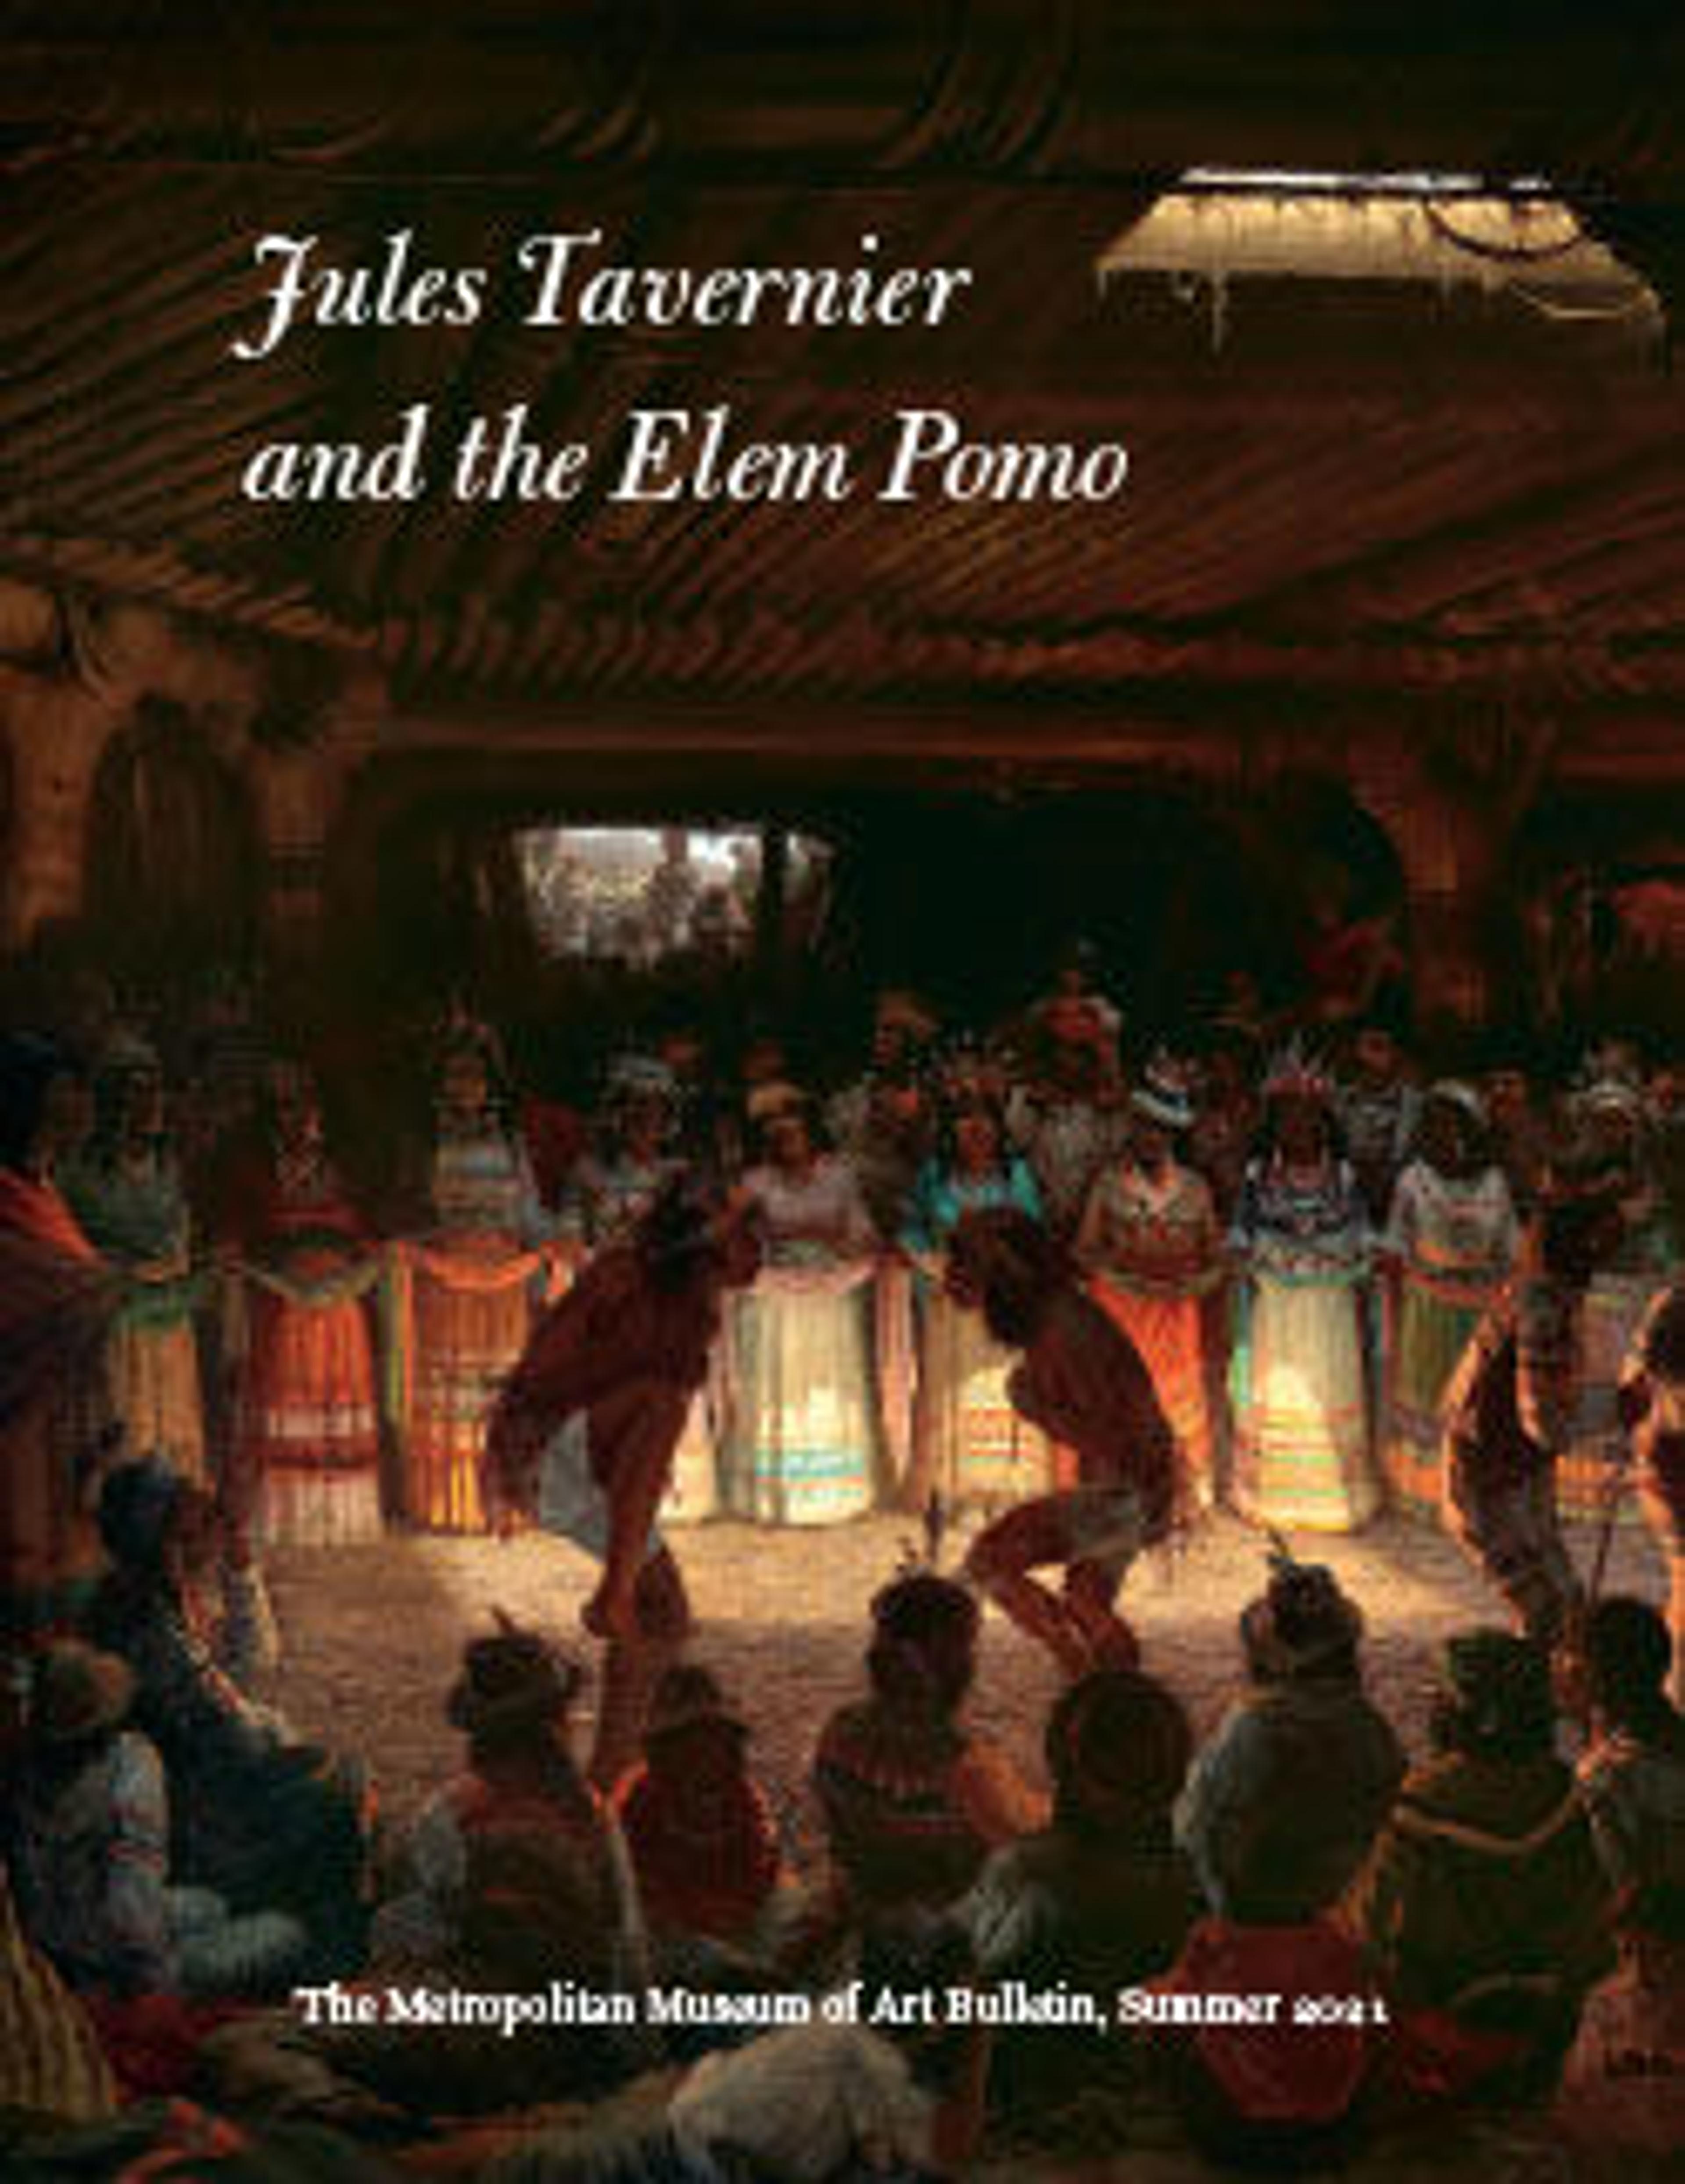 The cover of Jules Tavernier and the Elem Pomo: The Metropolitan Museum of Art Bulletin, v.79, no. 1 (Summer, 2021)